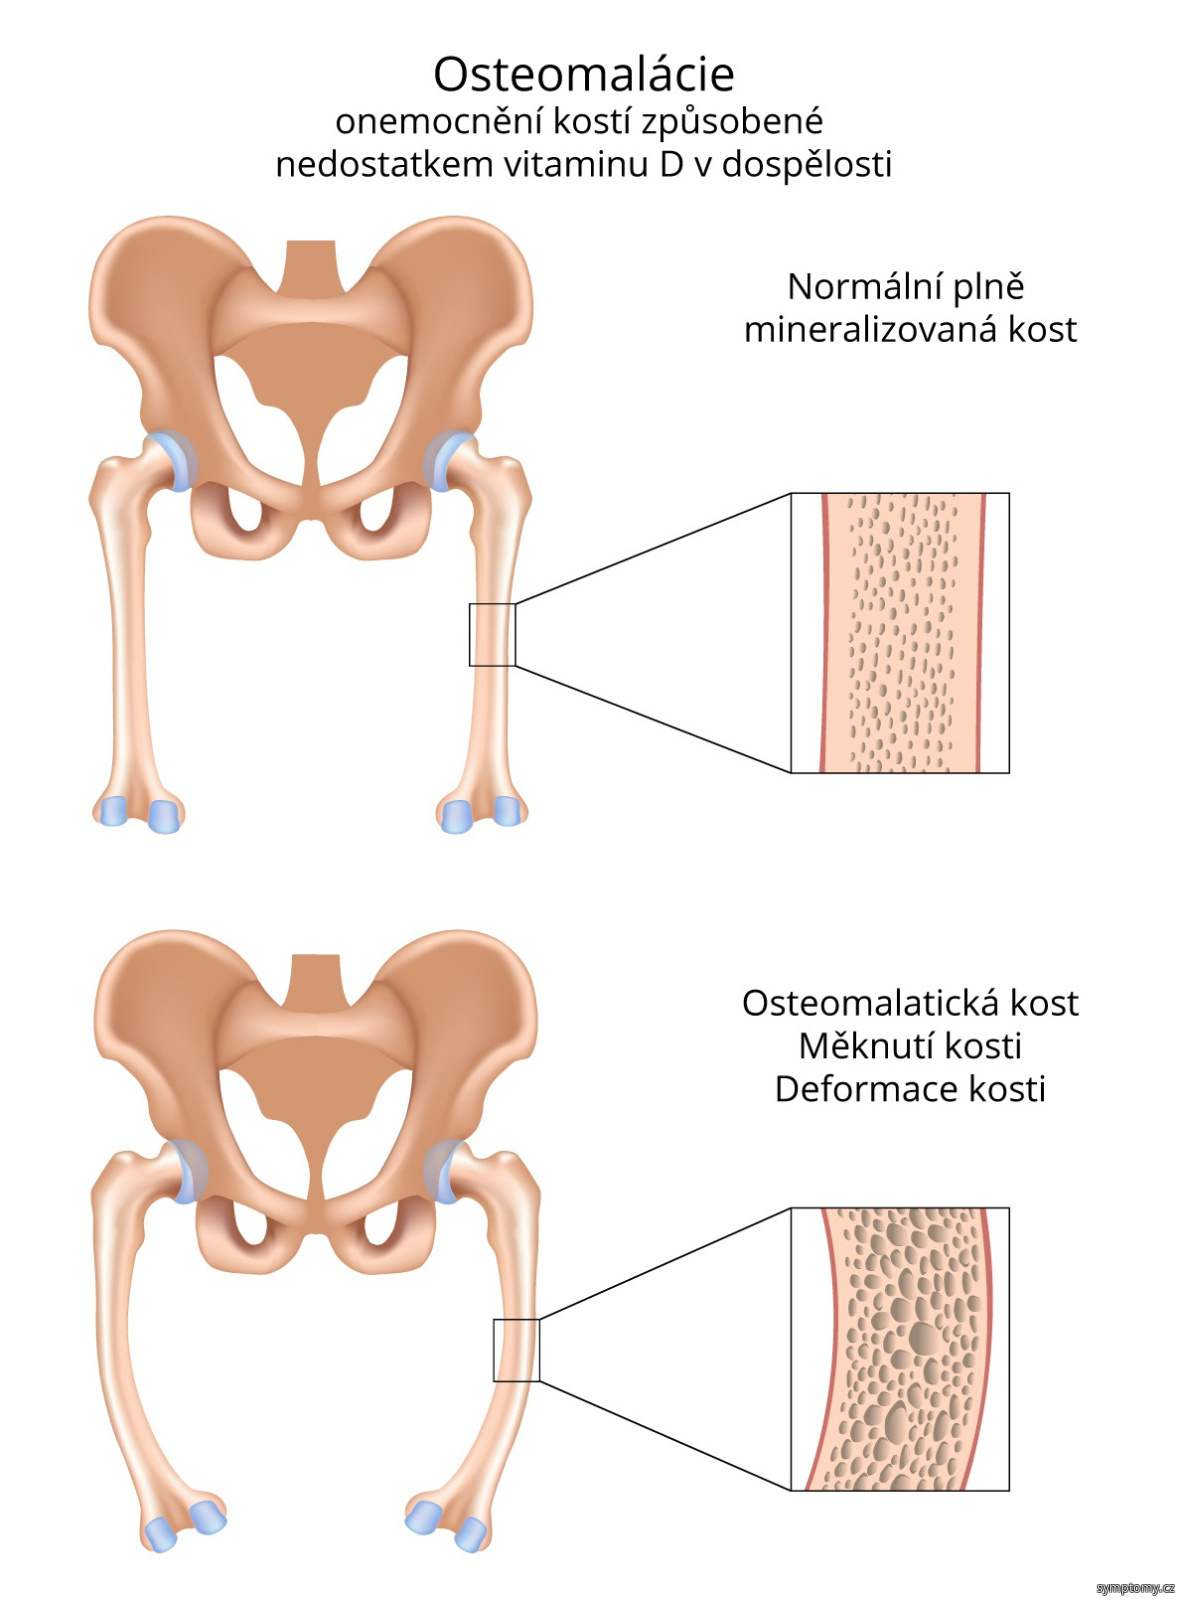 Osteomalácie